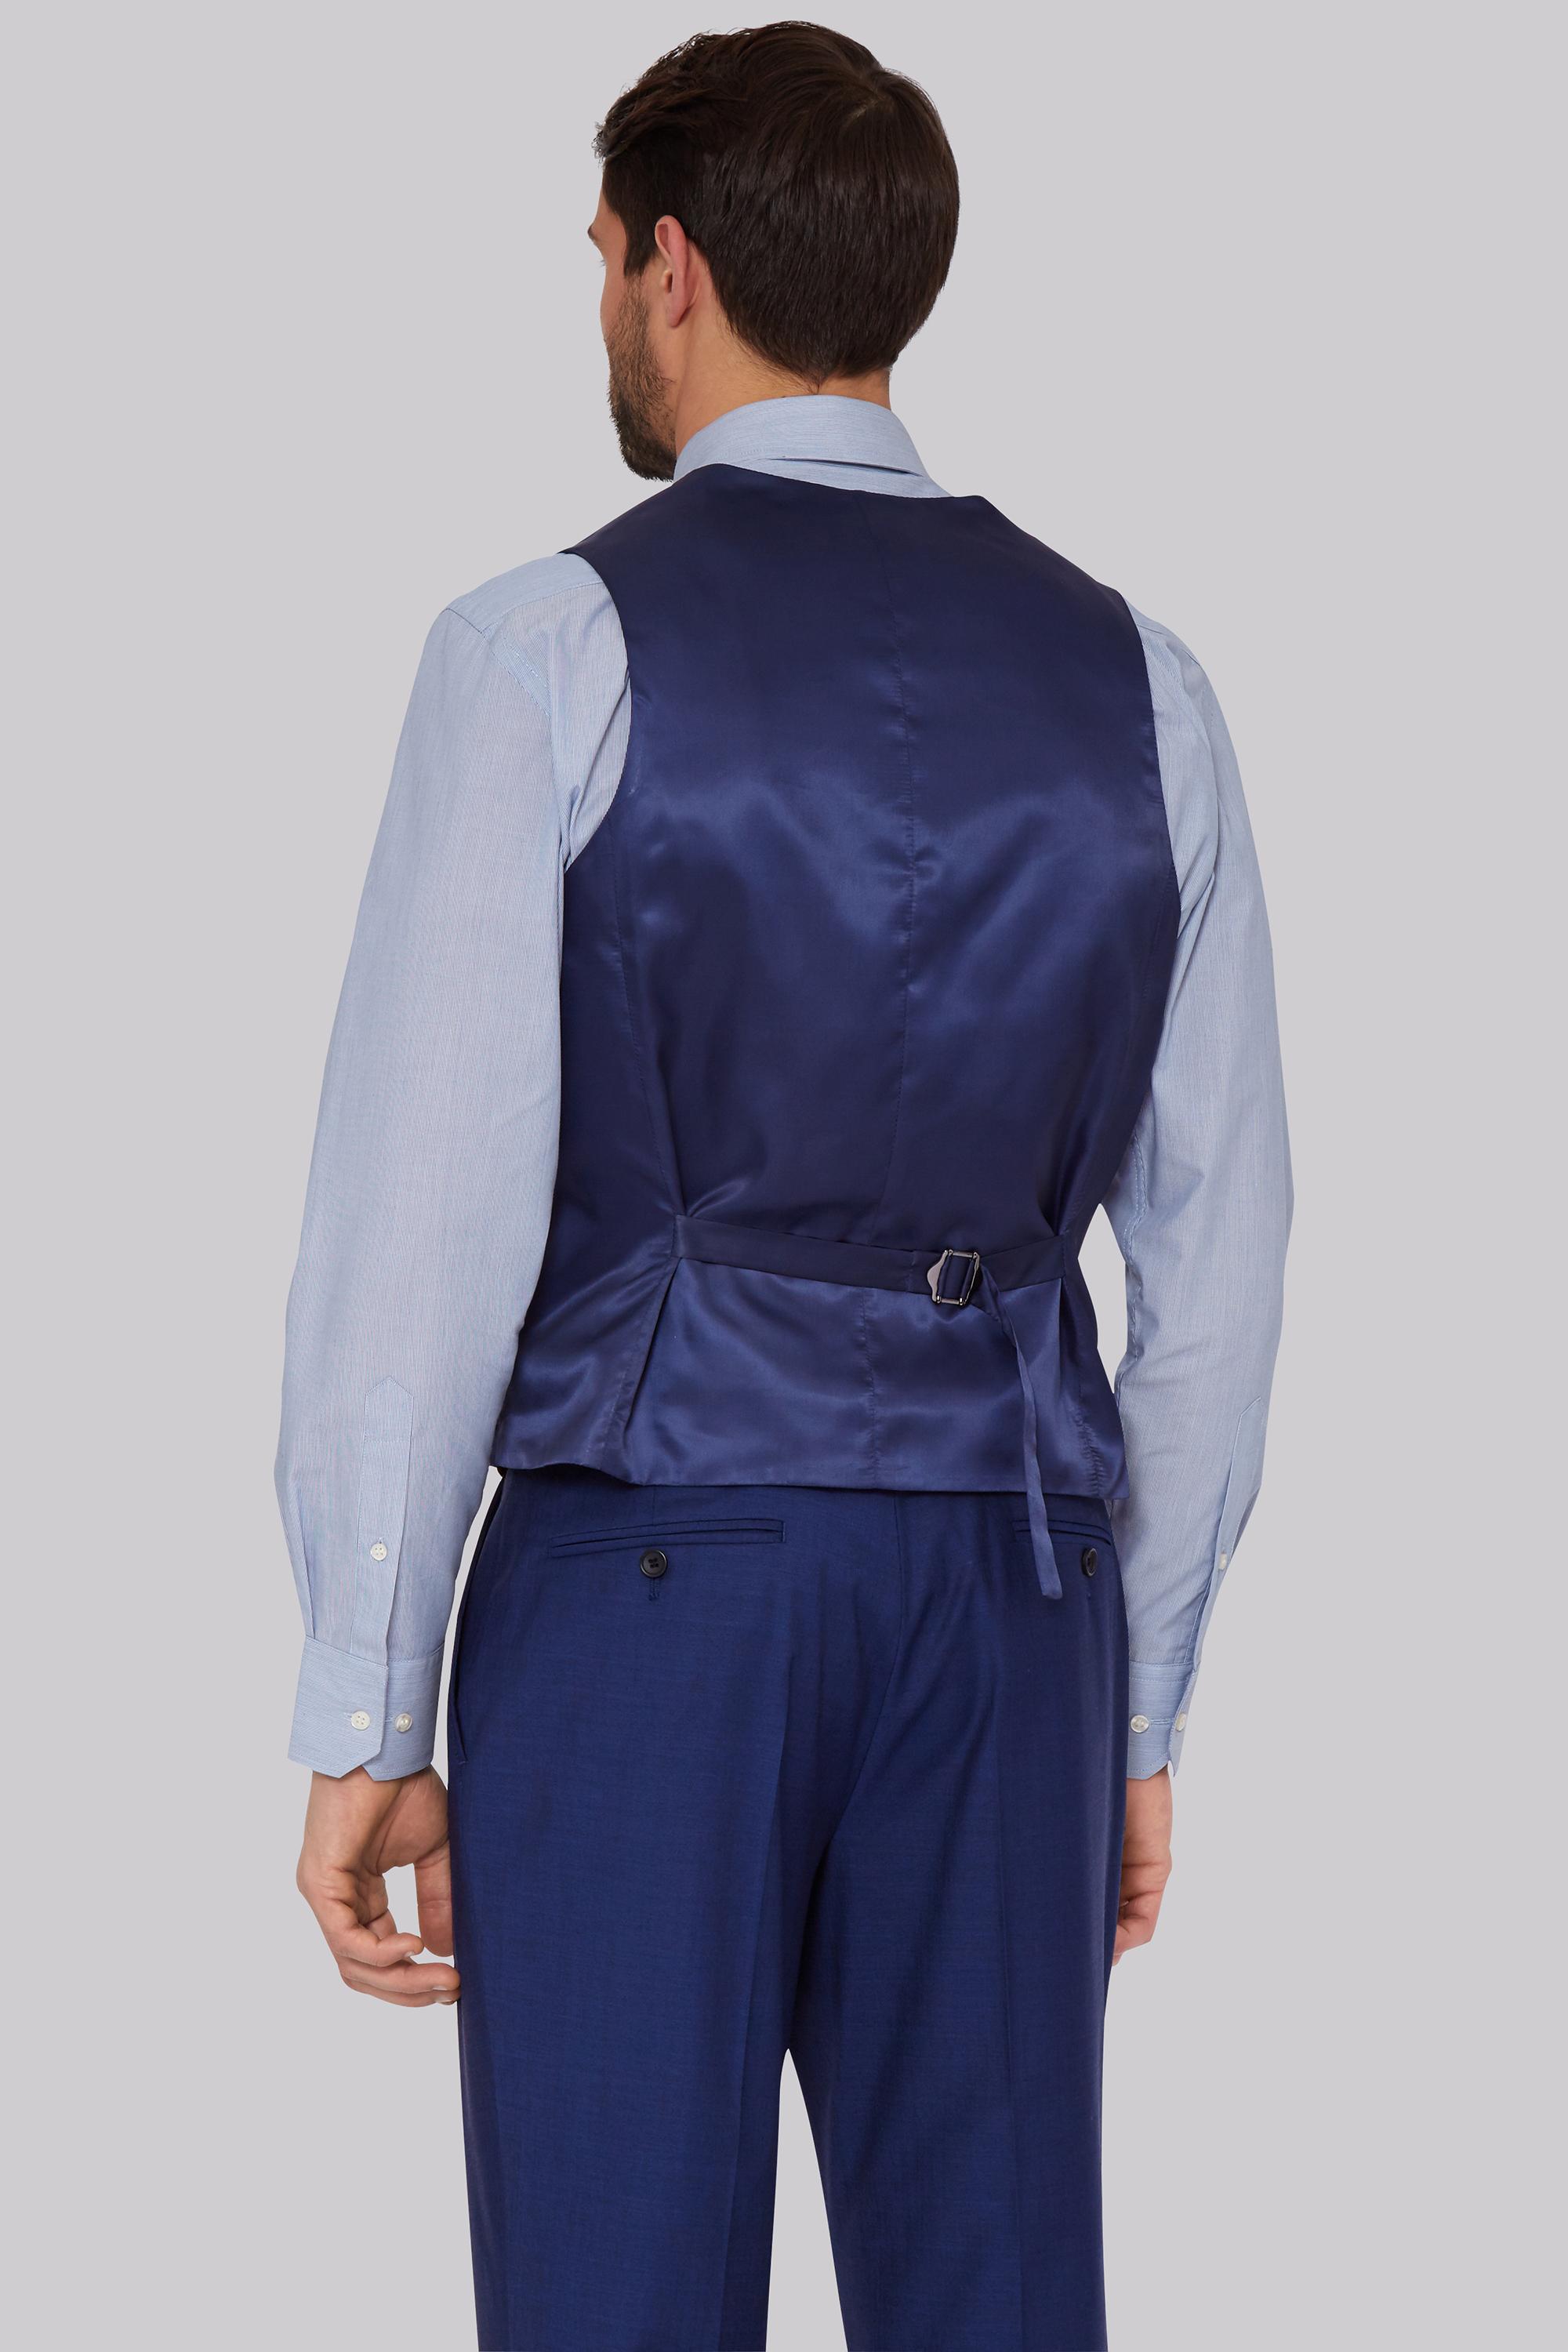 Lyst - Moss Esq. Performance Regular Fit Bright Blue Waistcoats in Blue ...